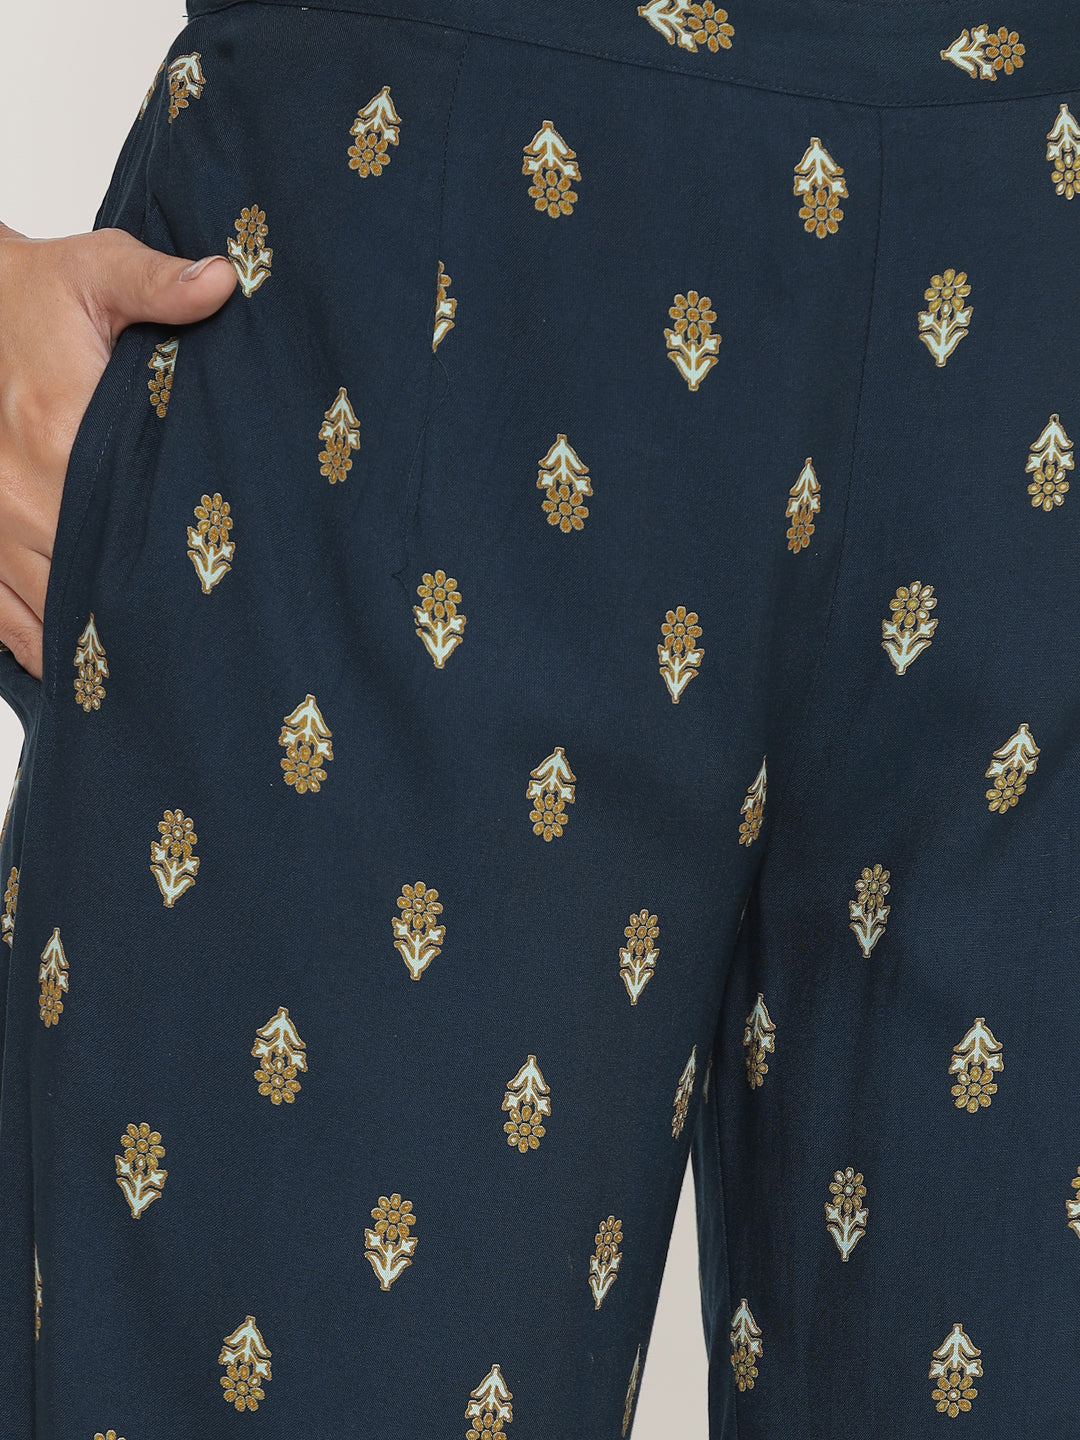 Women's Self Desgin Rayon Fabric Palazzo-Set Navy Color - Kipek